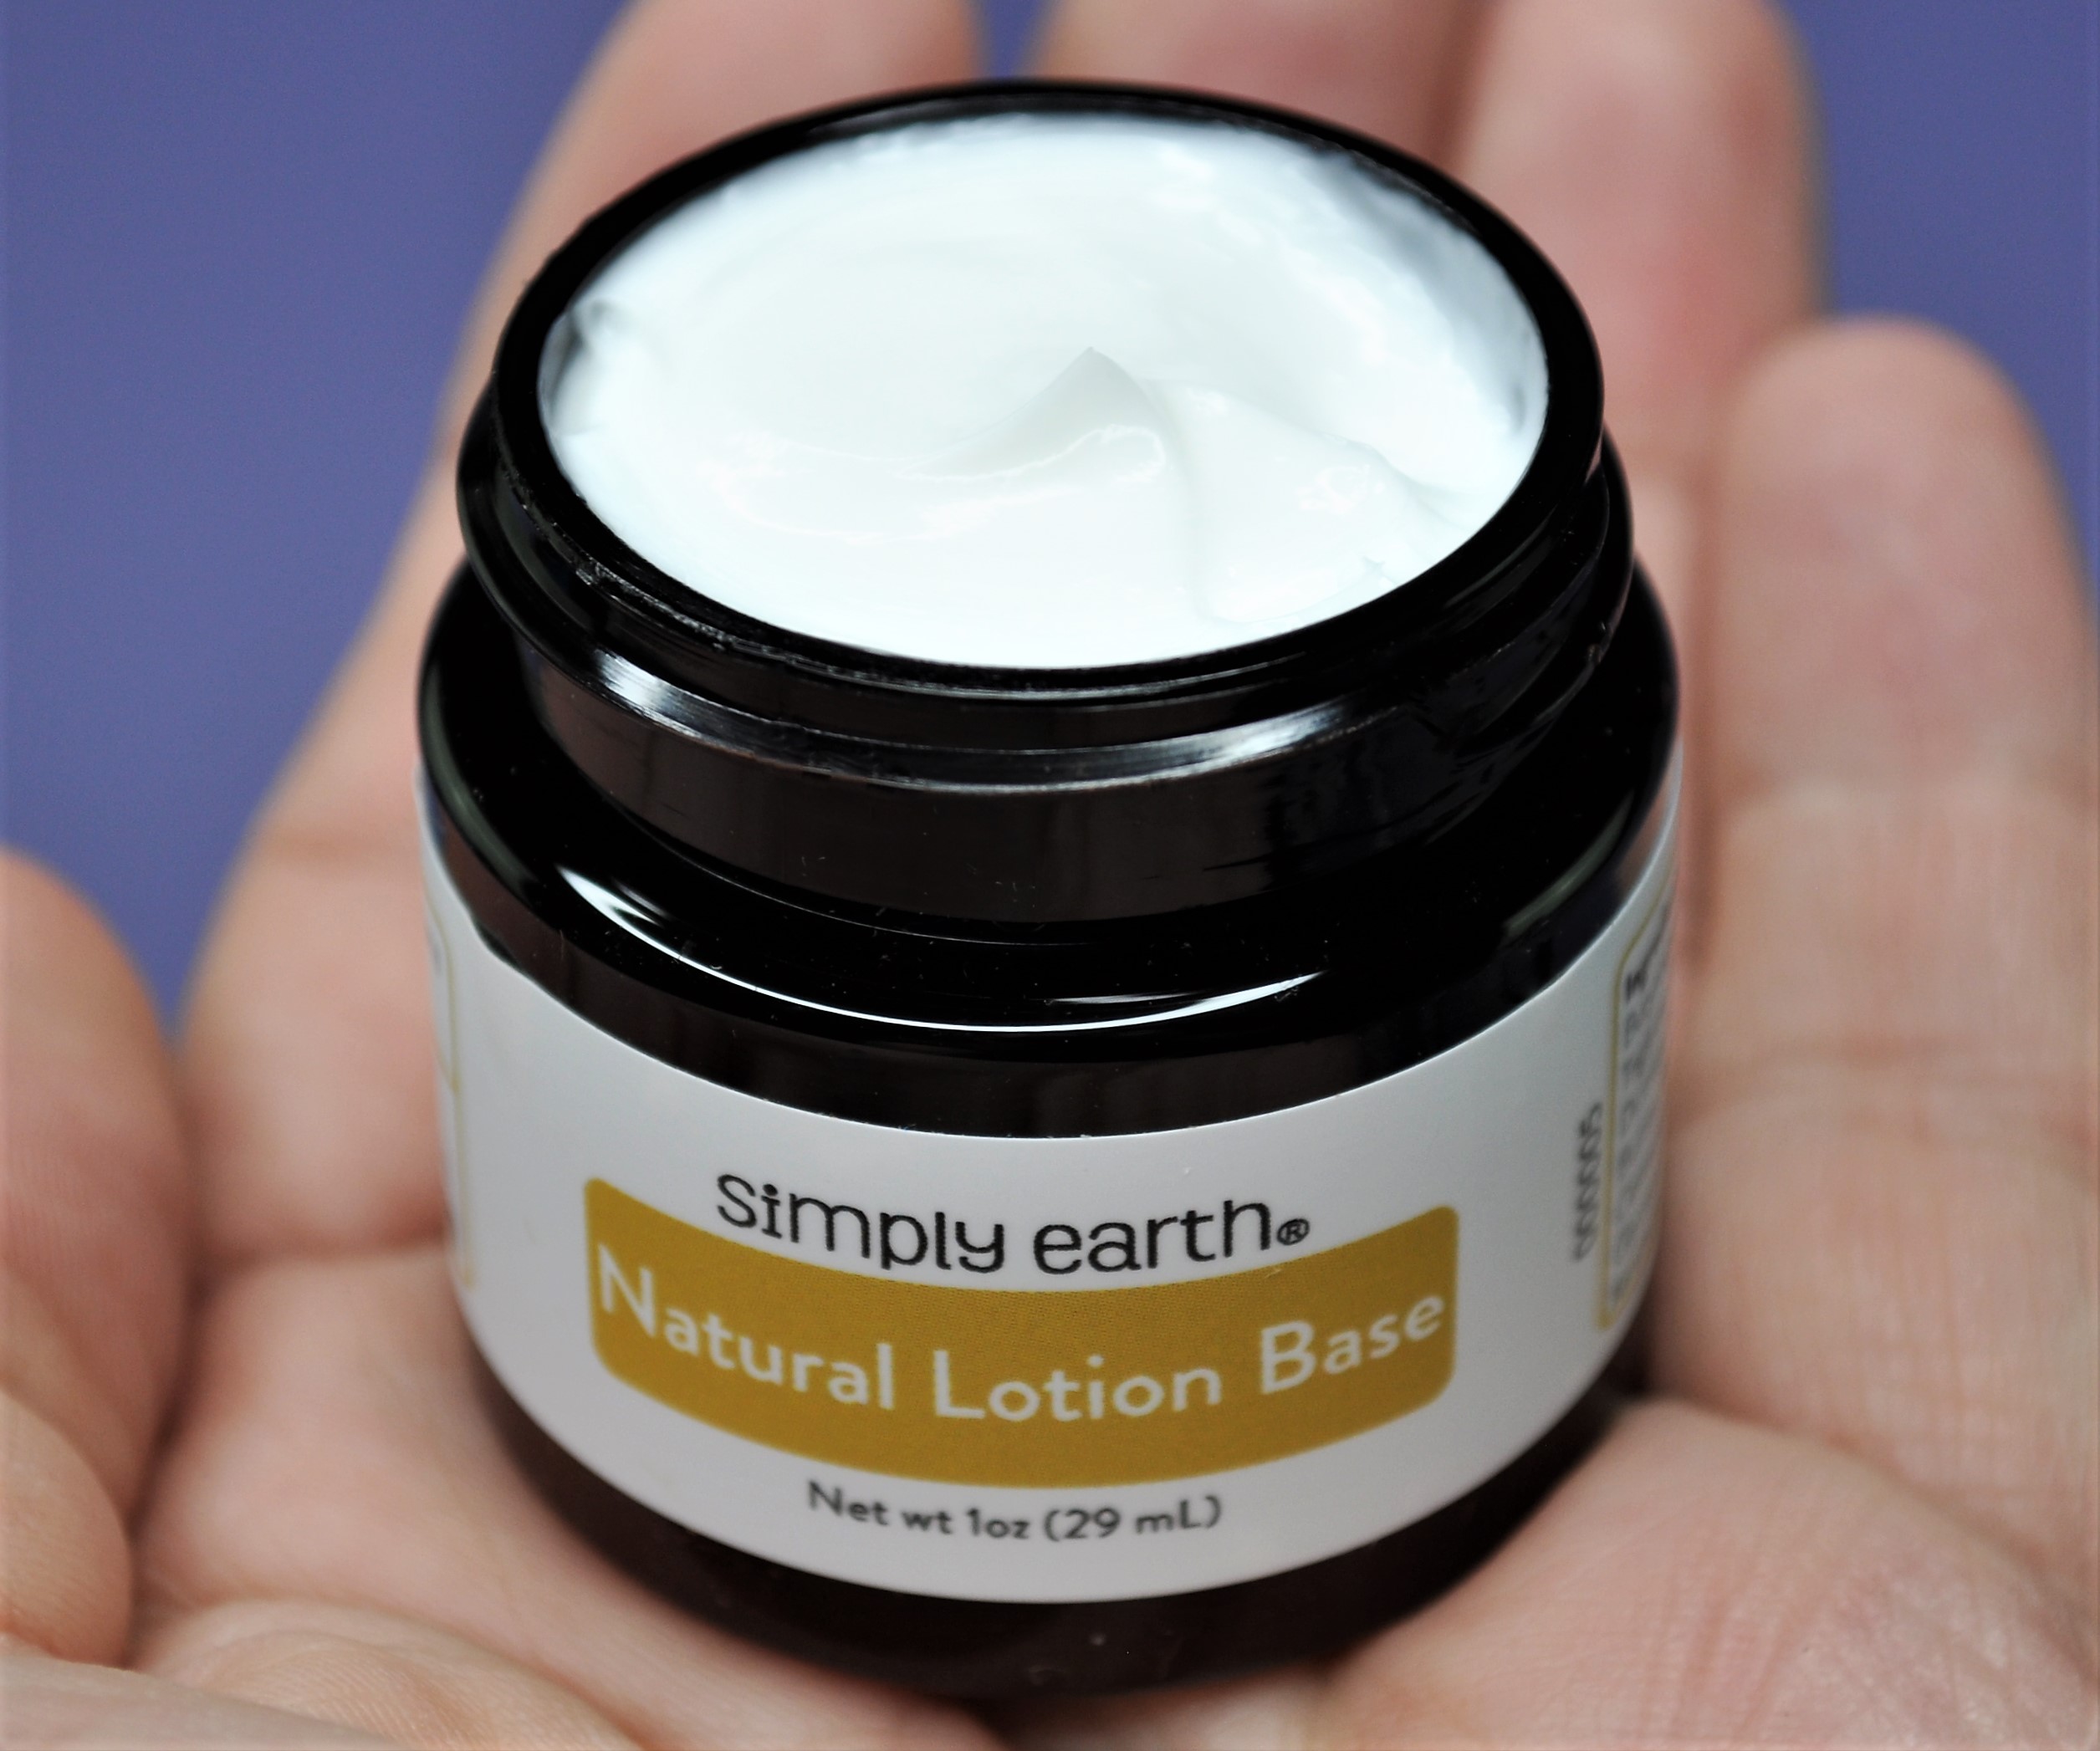 Simply Earth Natural Lotion Base